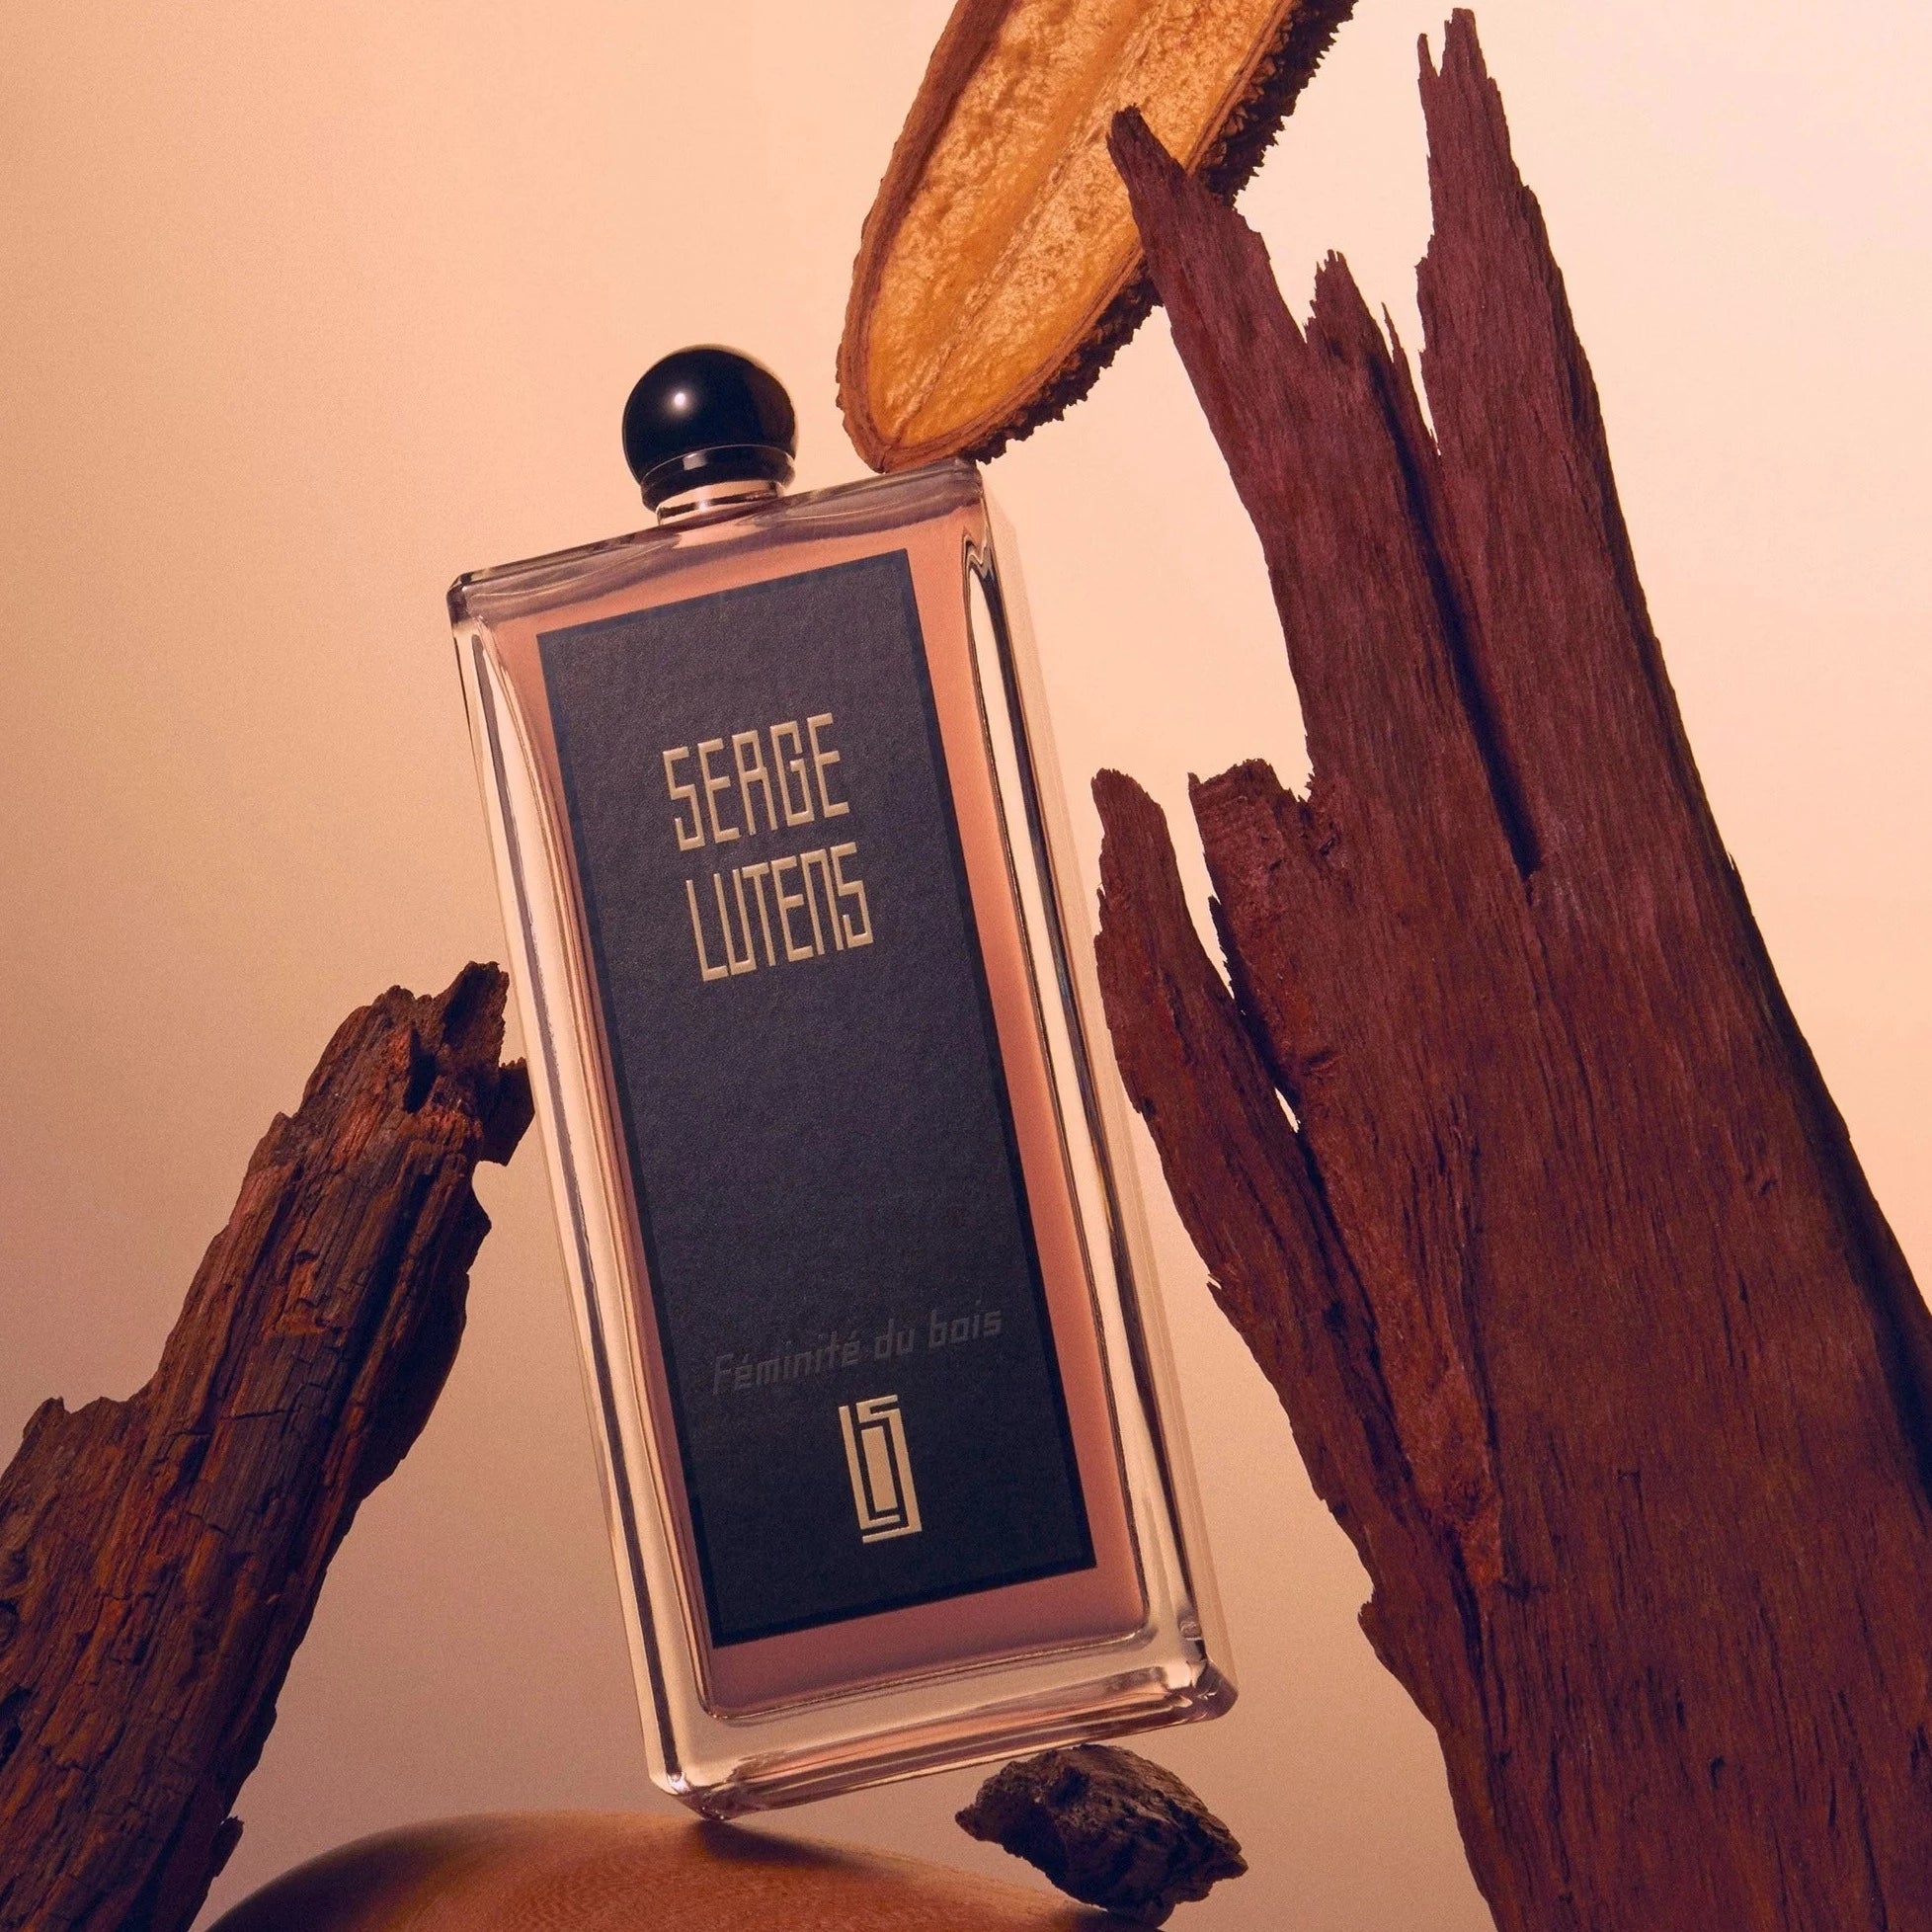 Serge Lutens Feminite Du Bois EDP | My Perfume Shop Australia